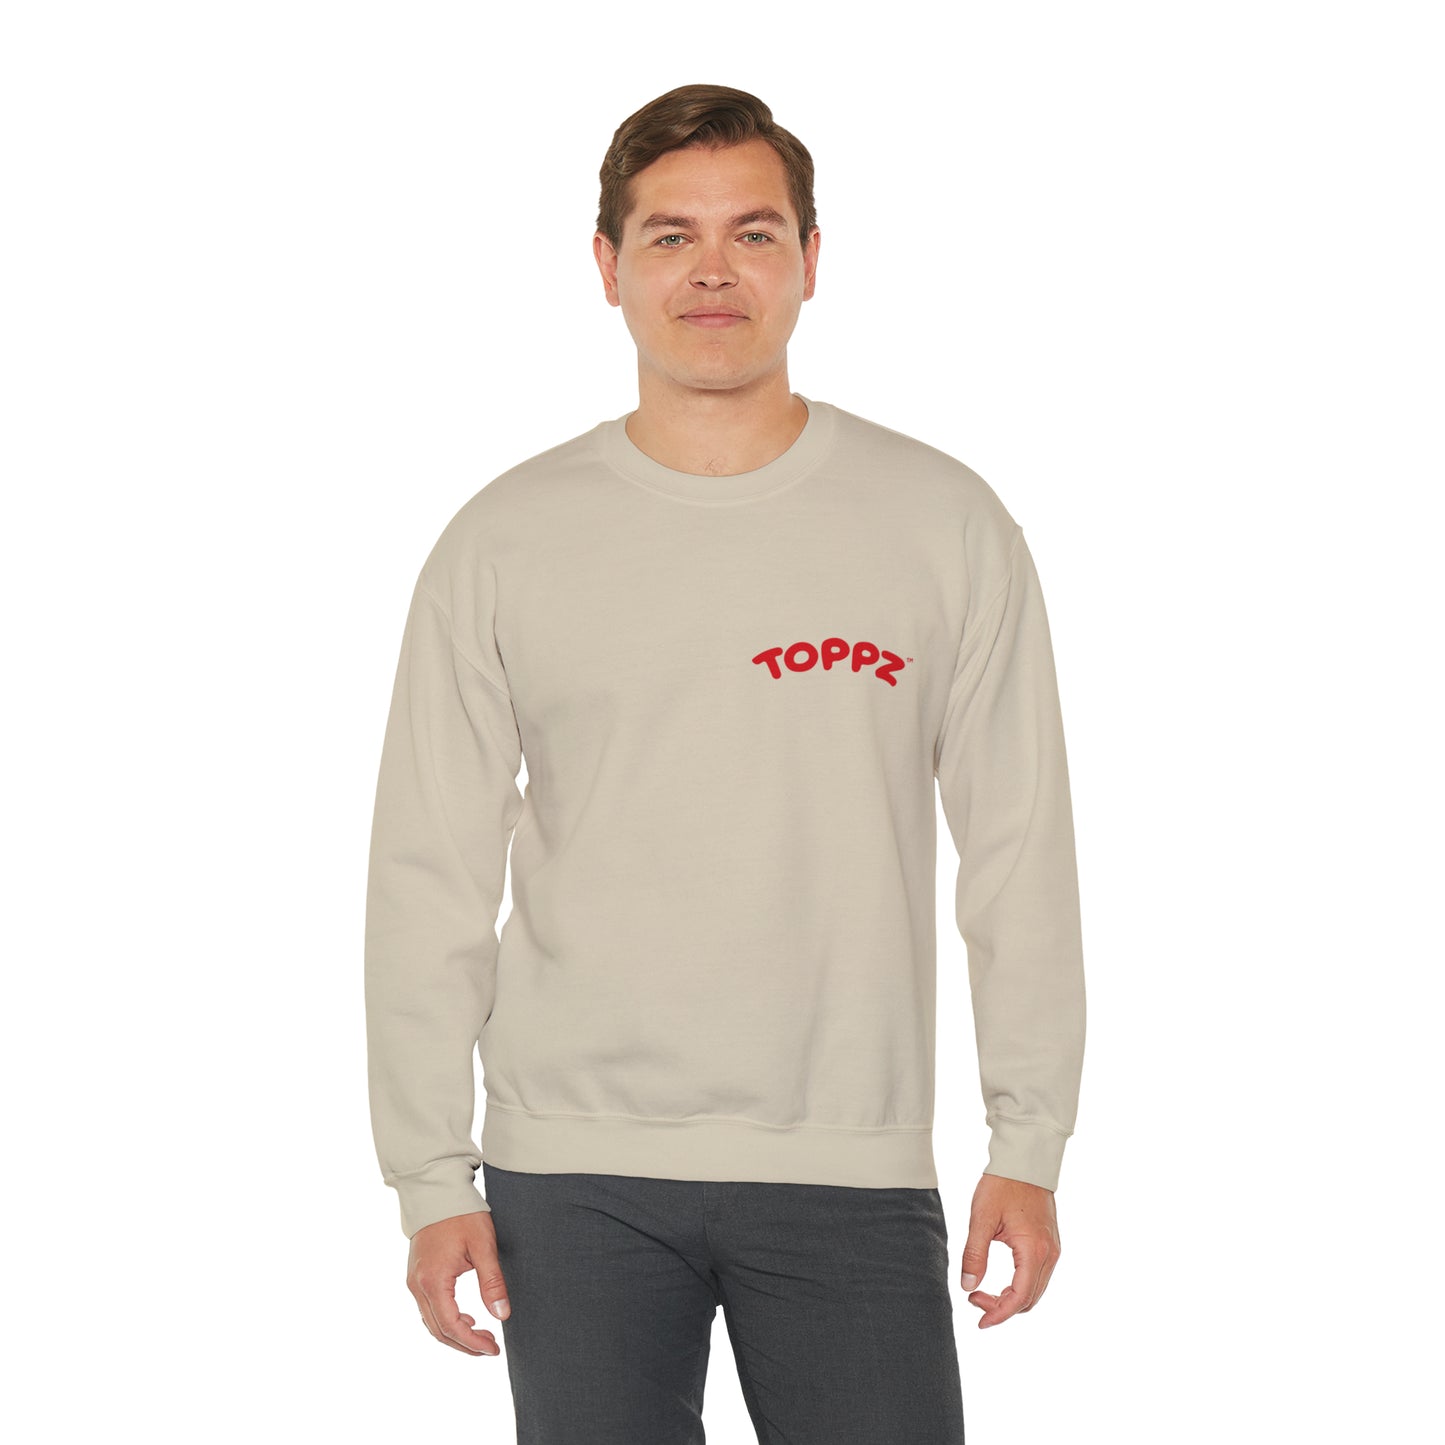 Toppz Unisex Crewneck Sweatshirt